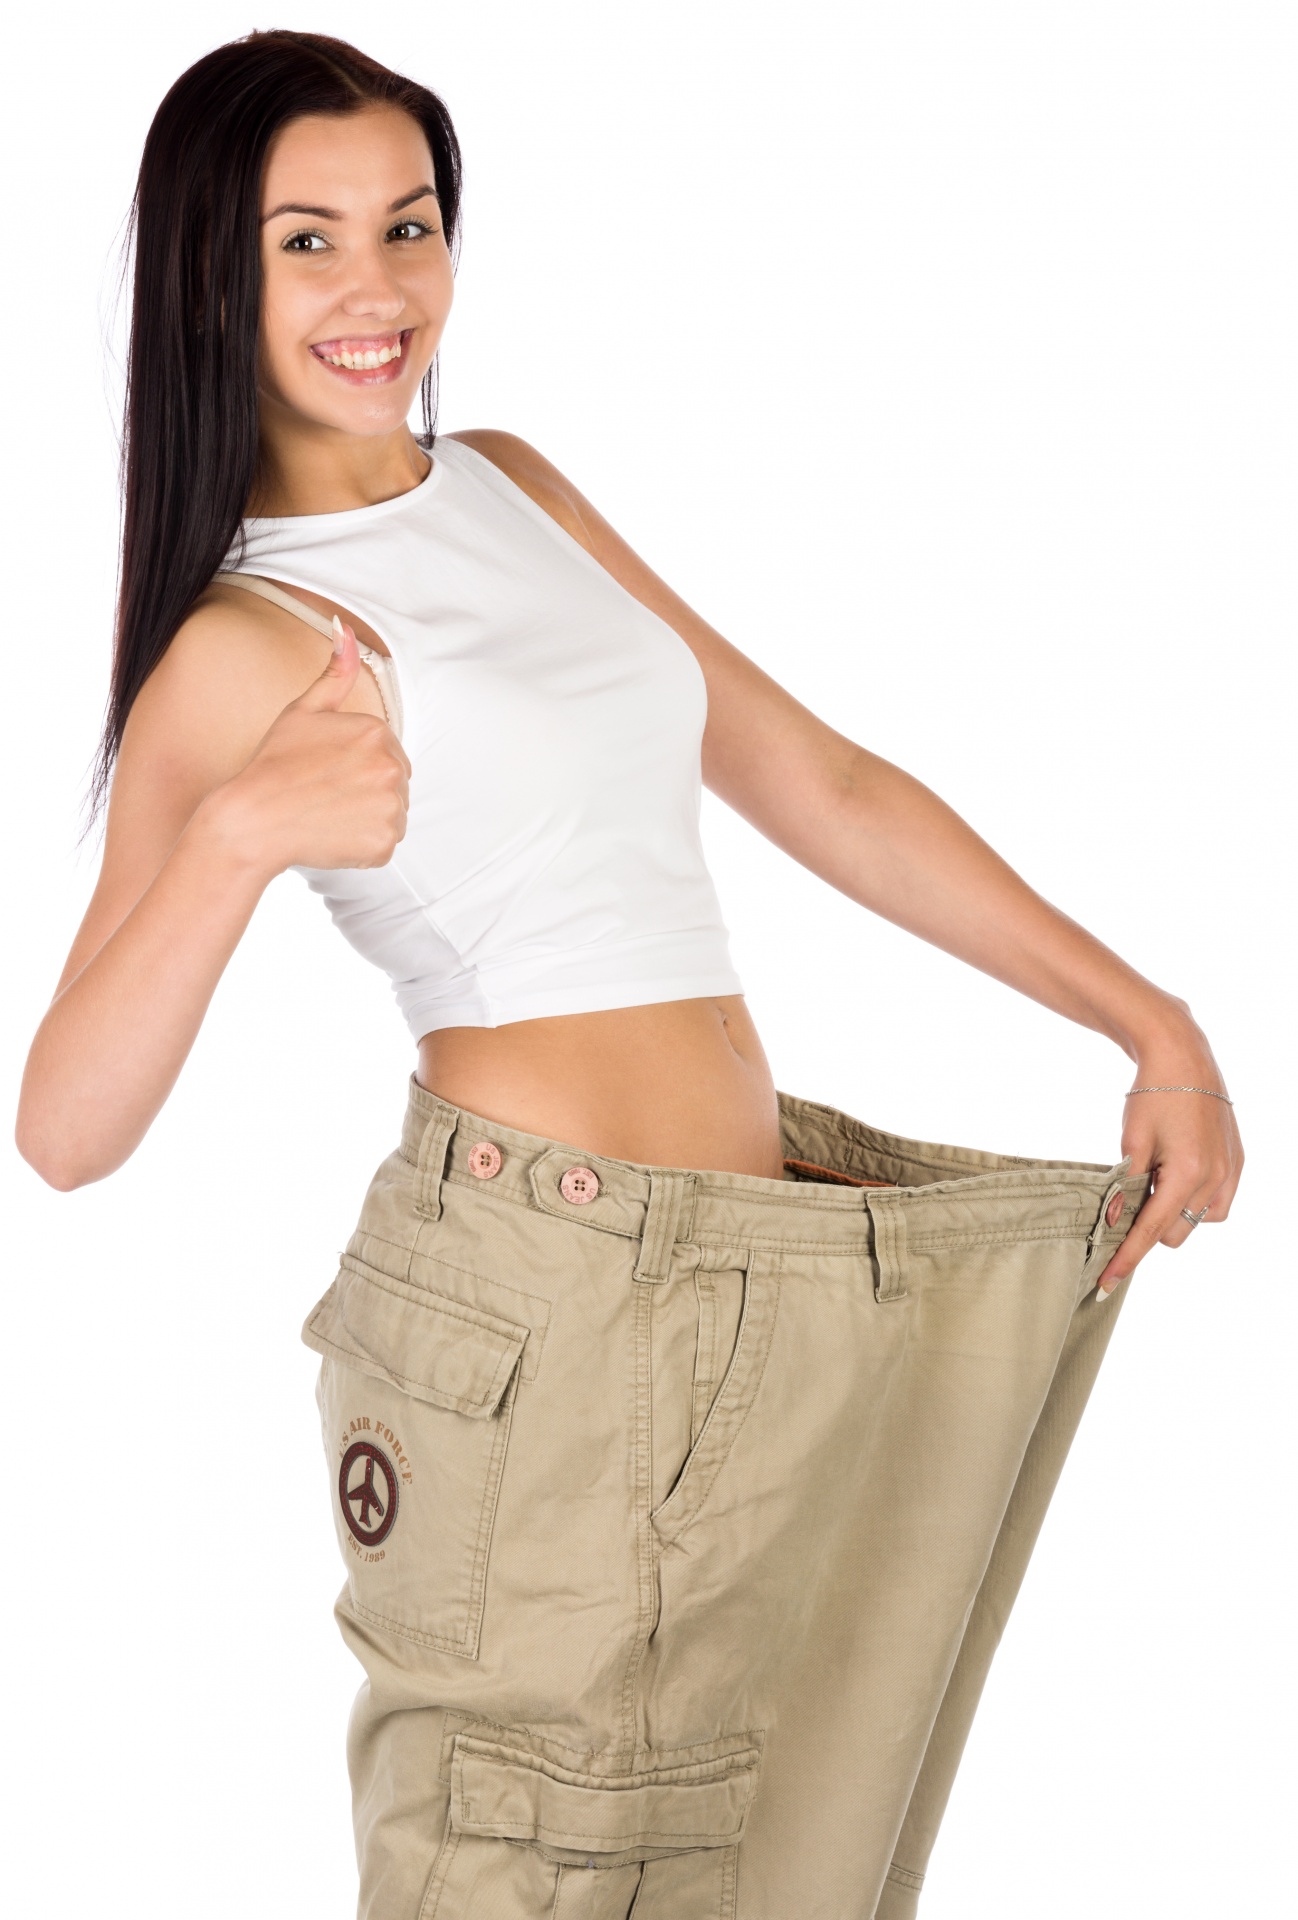 Femeie în pantaloni după dieta